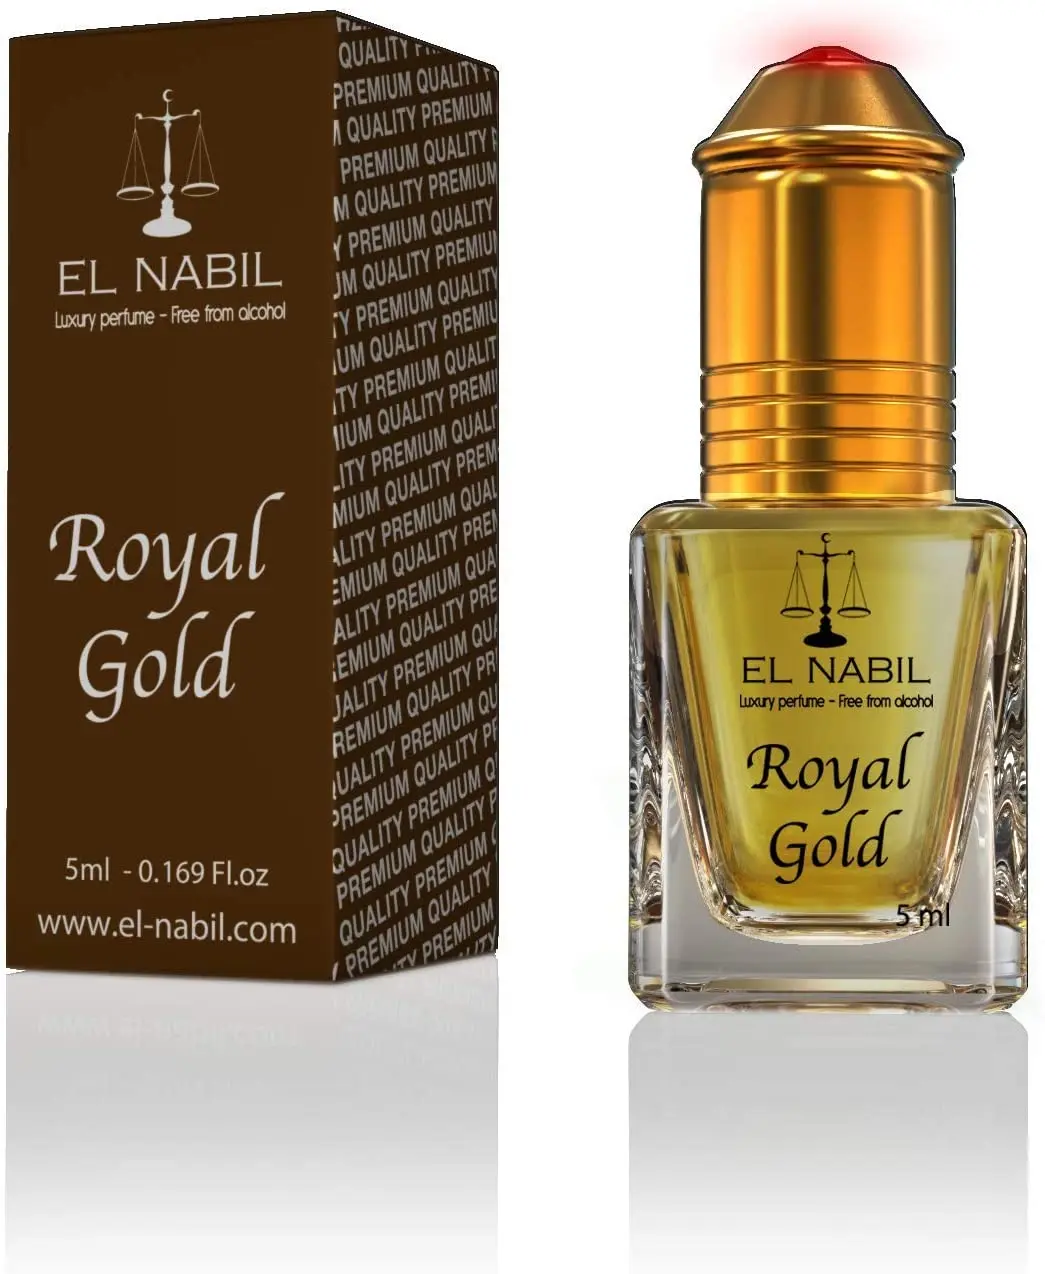 El Nabil wholesale products